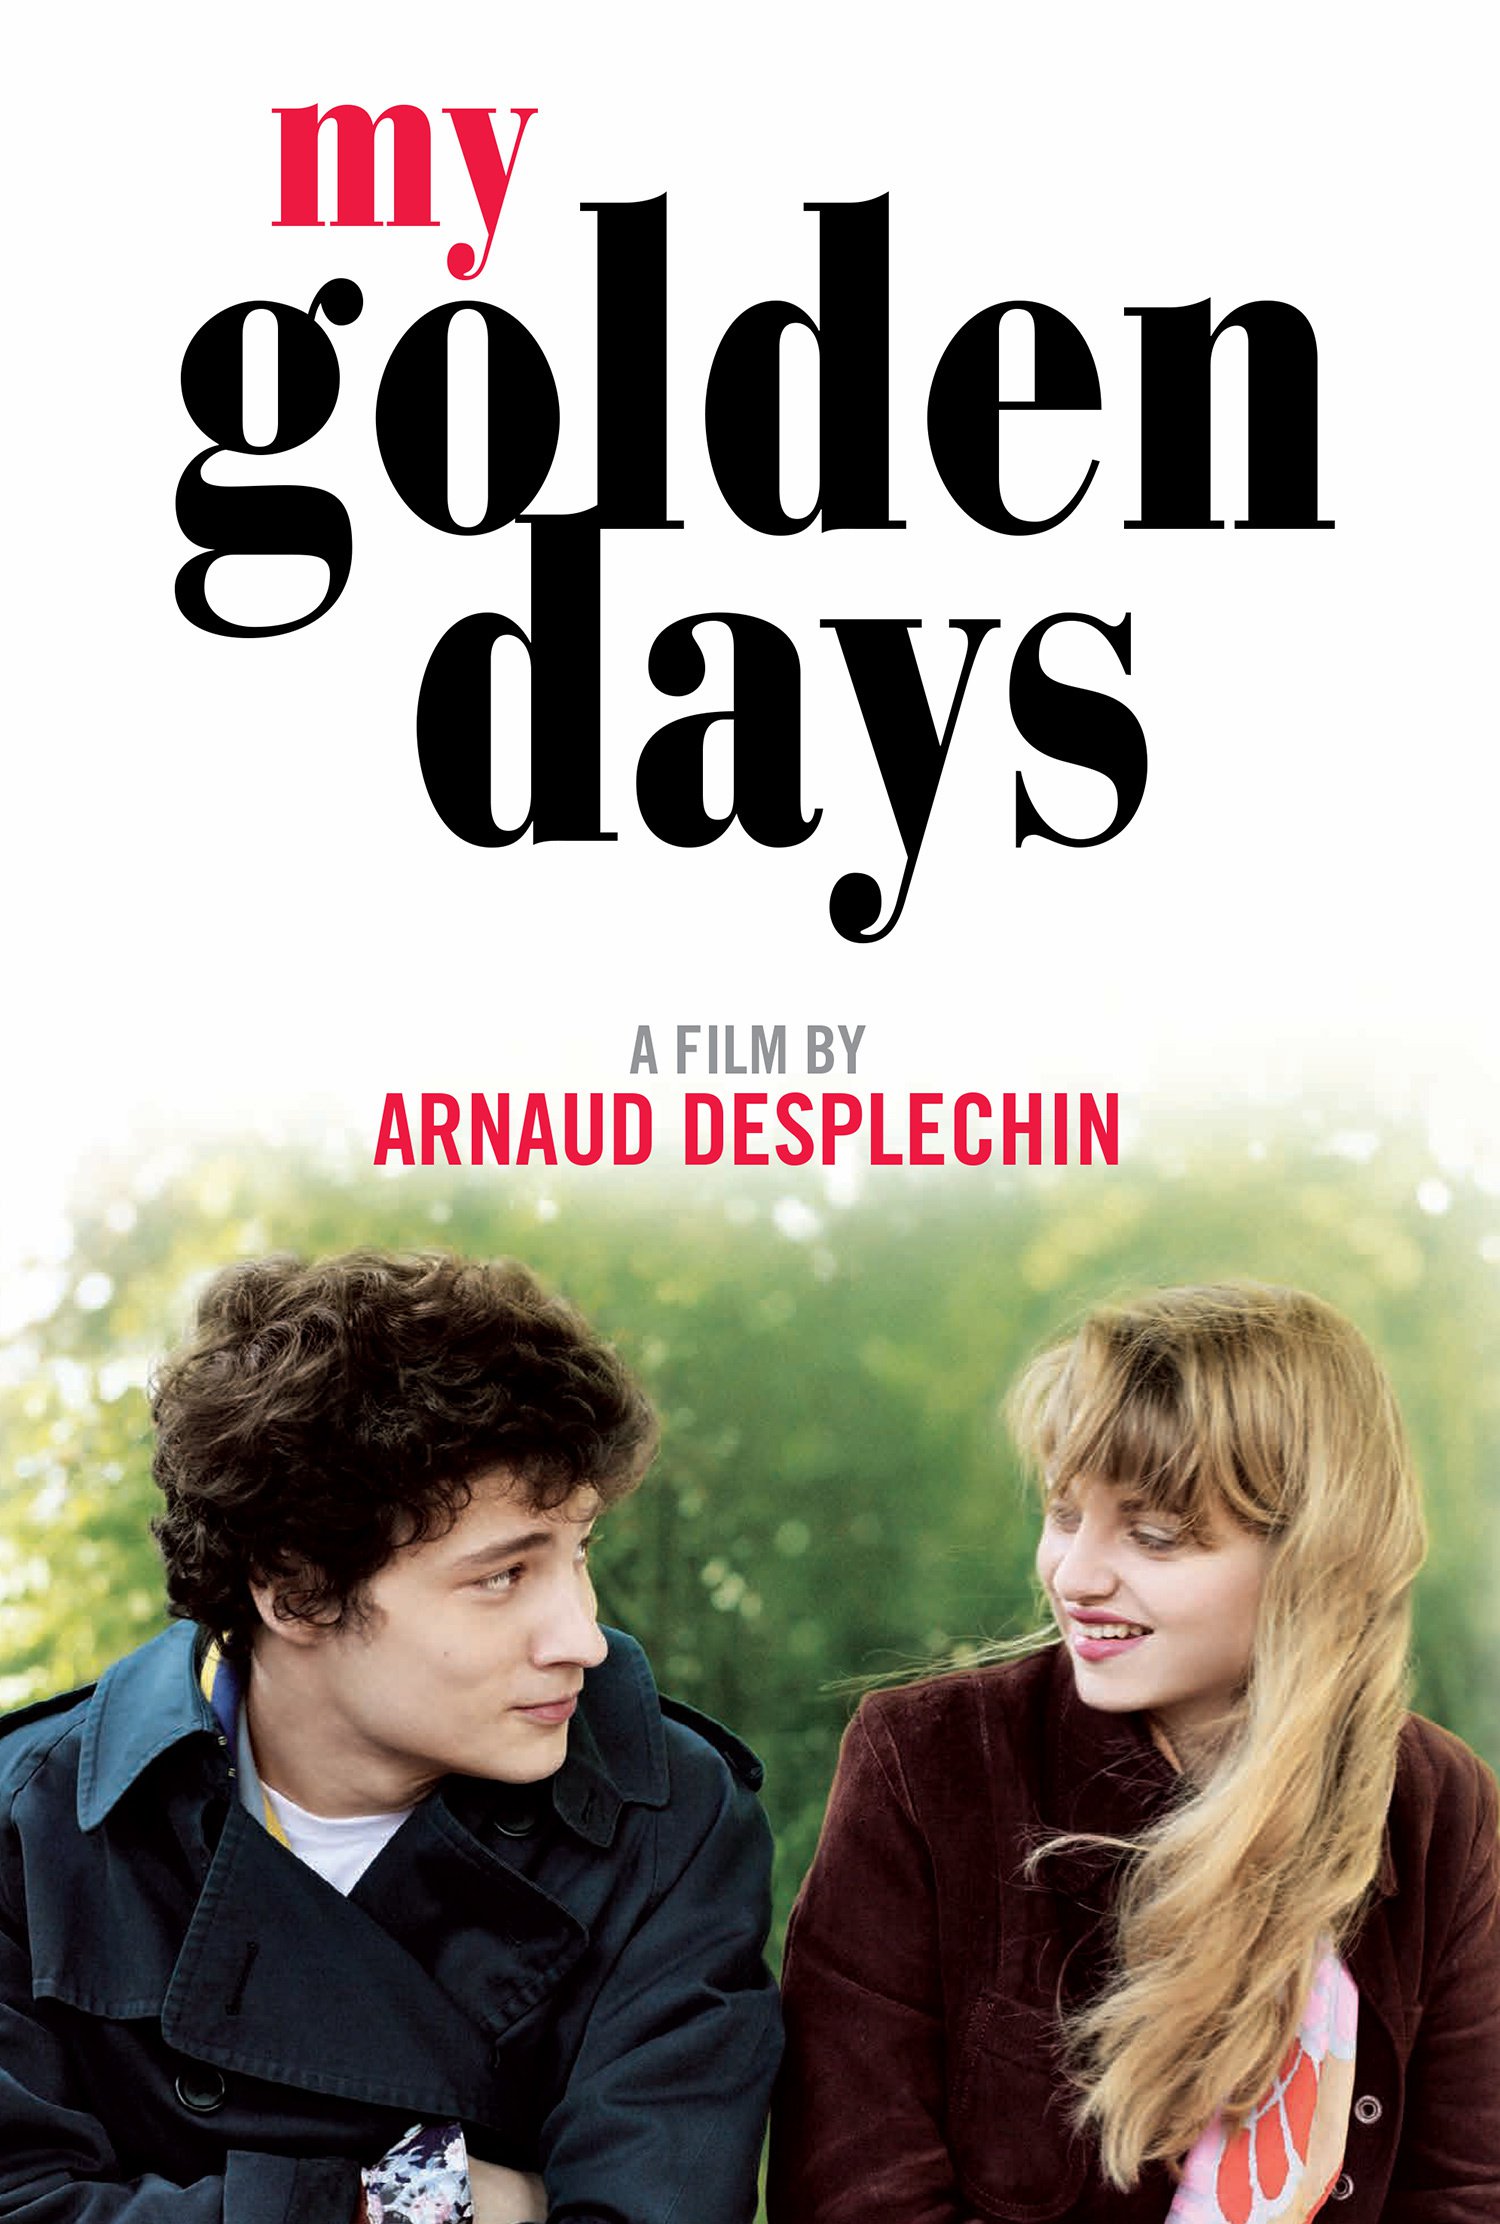 [NYFF Review] My Golden Days1500 x 2224